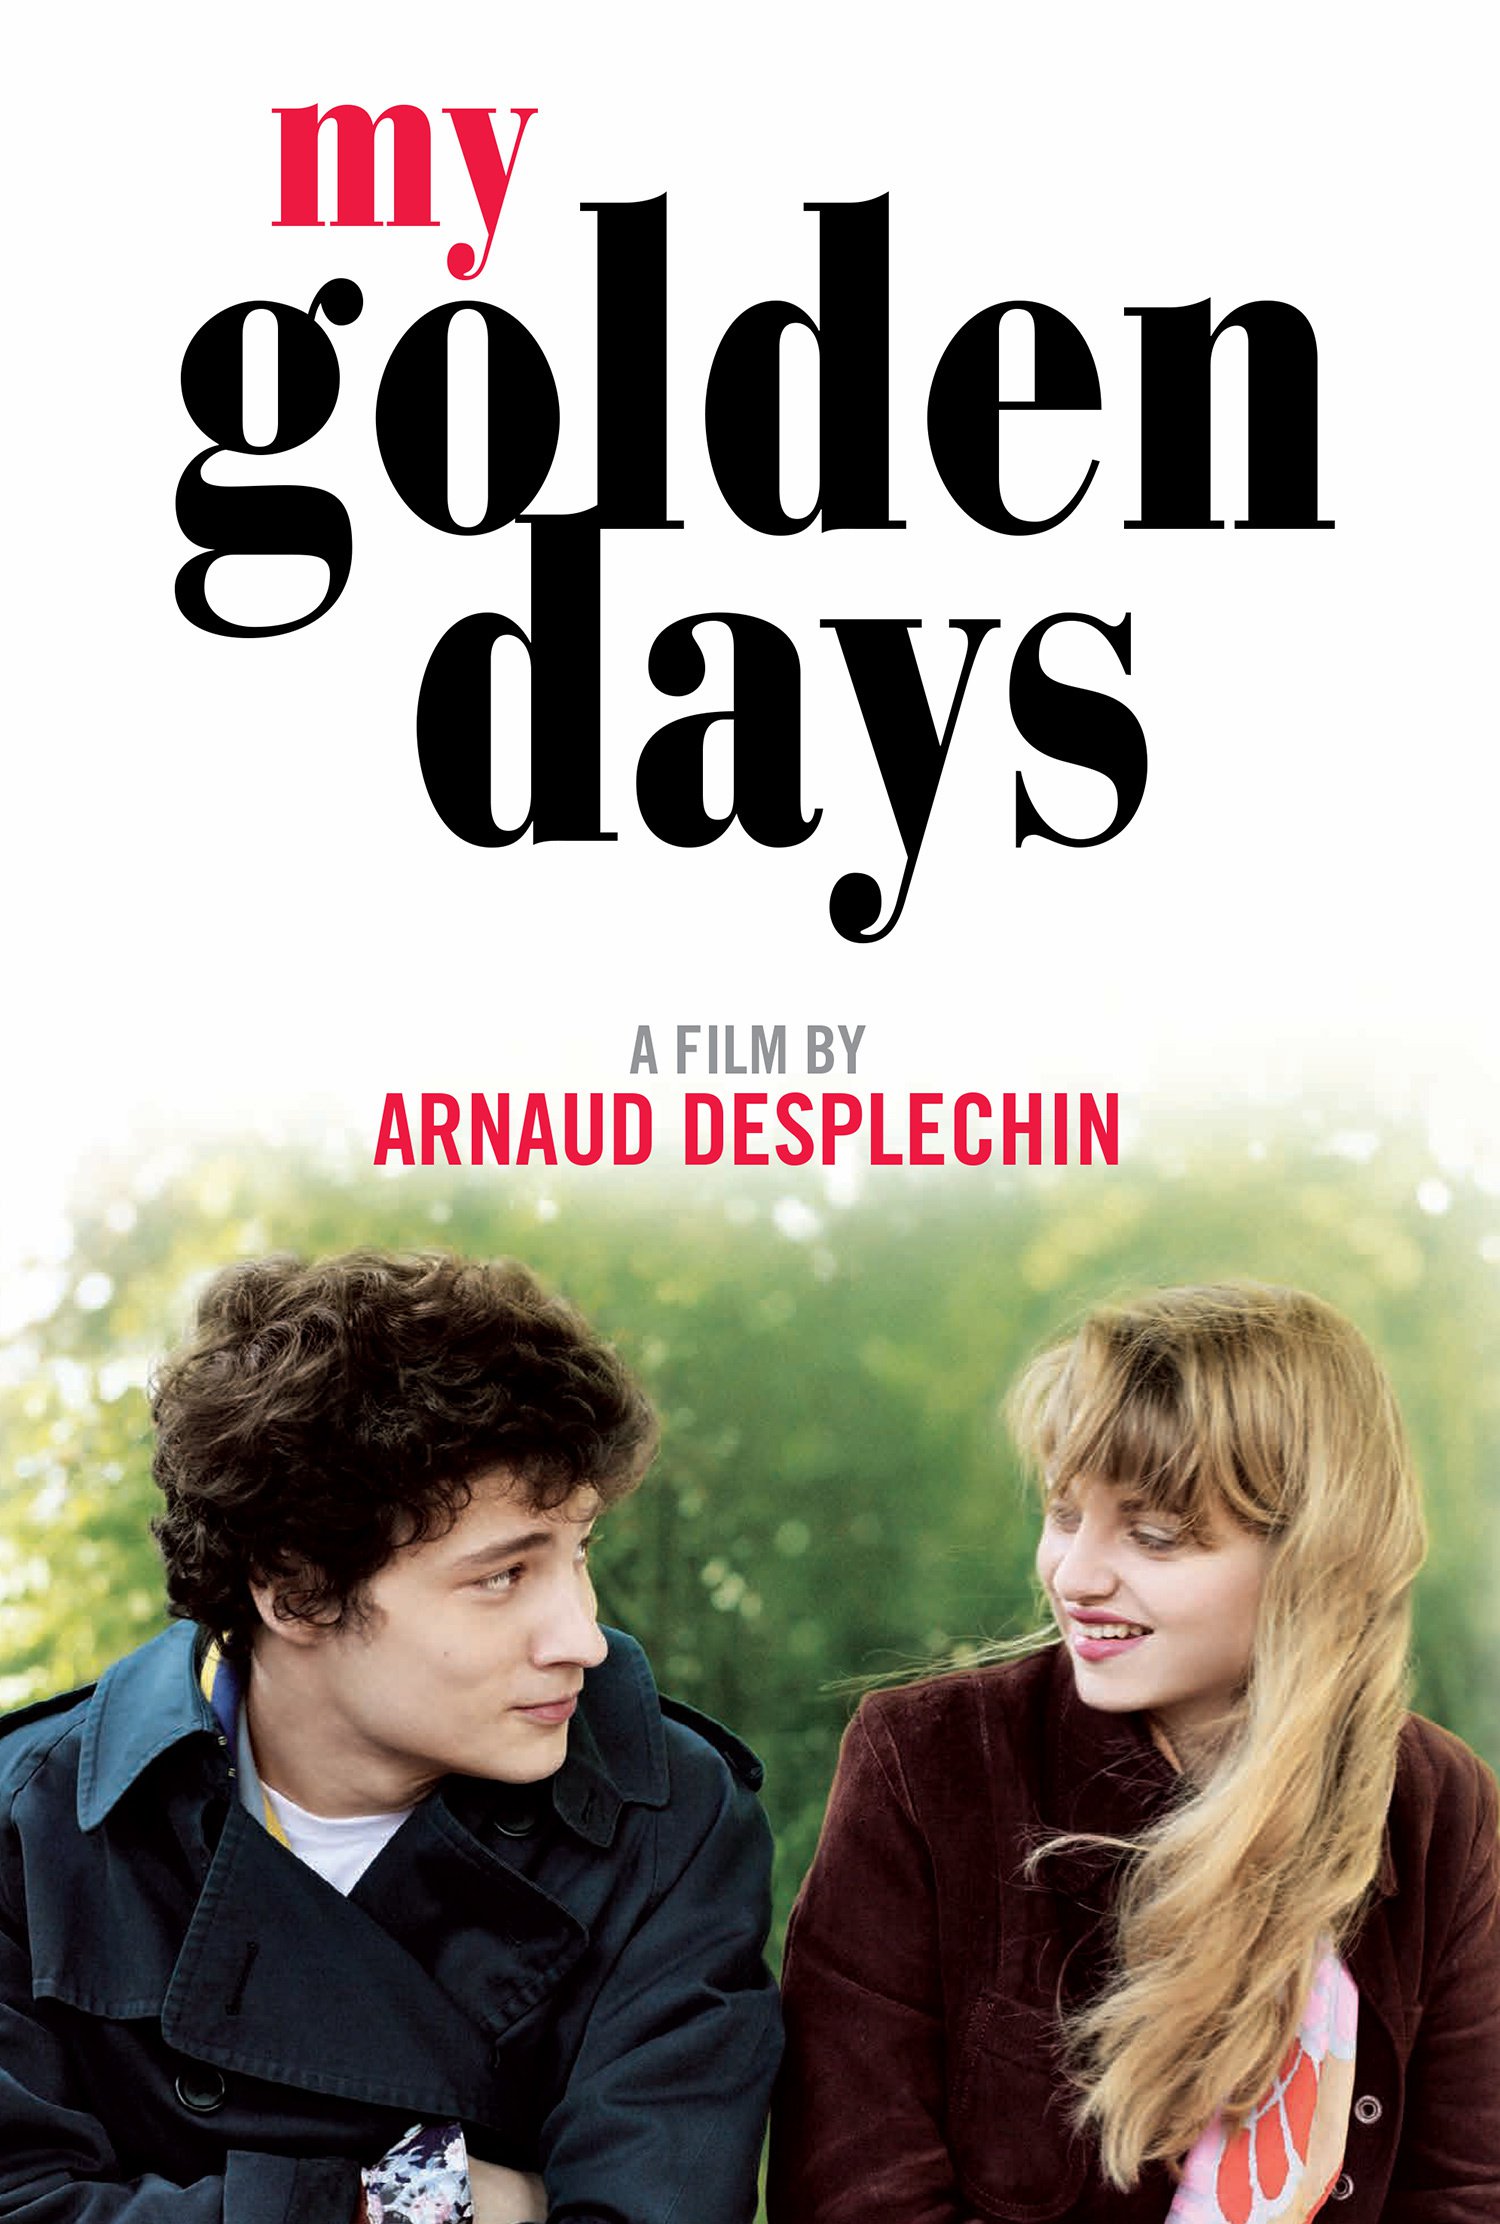 [NYFF Review] My Golden Days1500 x 2224